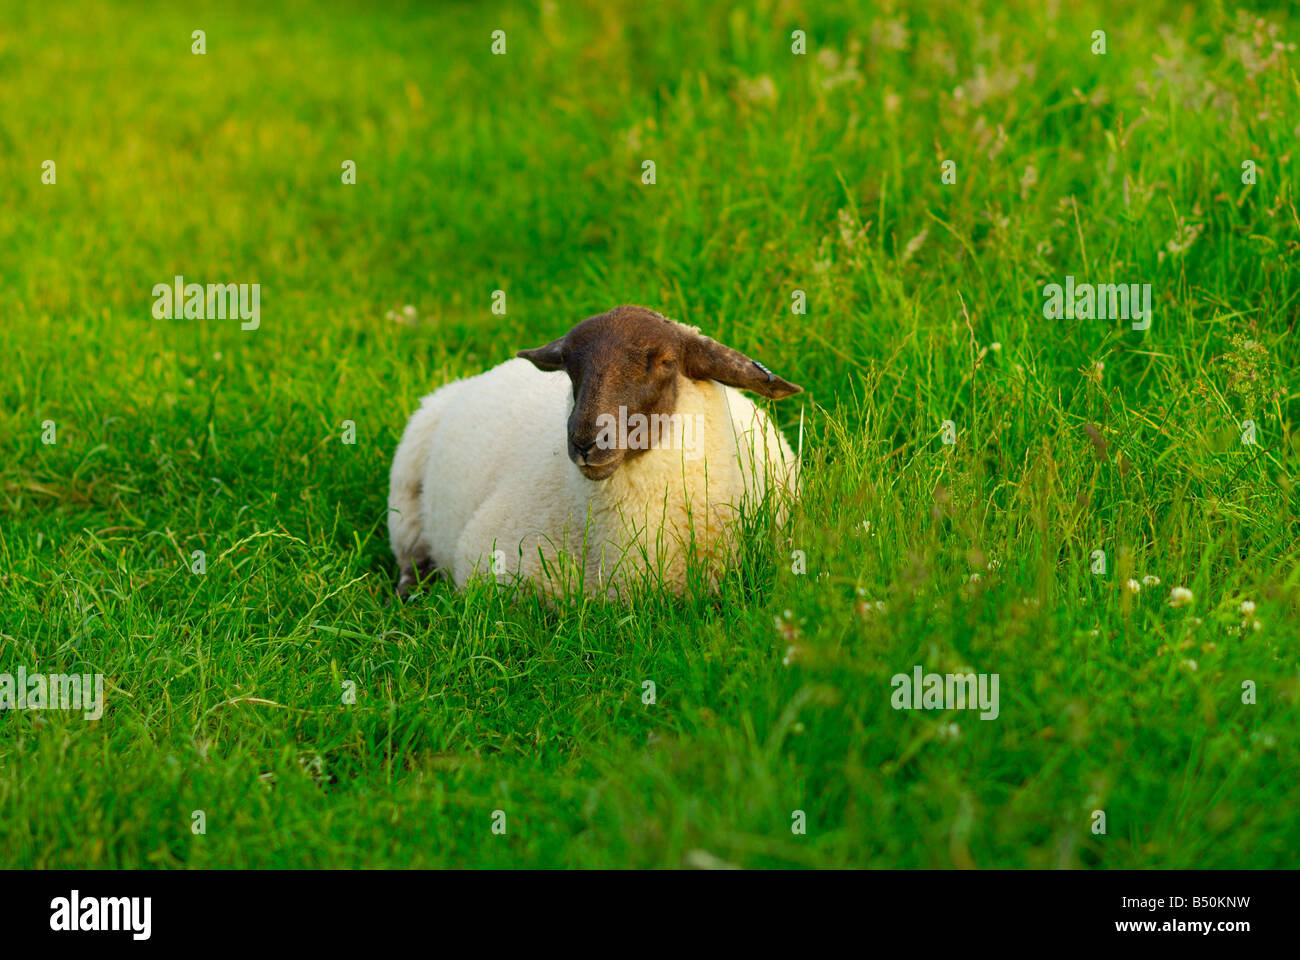 Black headed sheep lying down in green grass Stock Photo